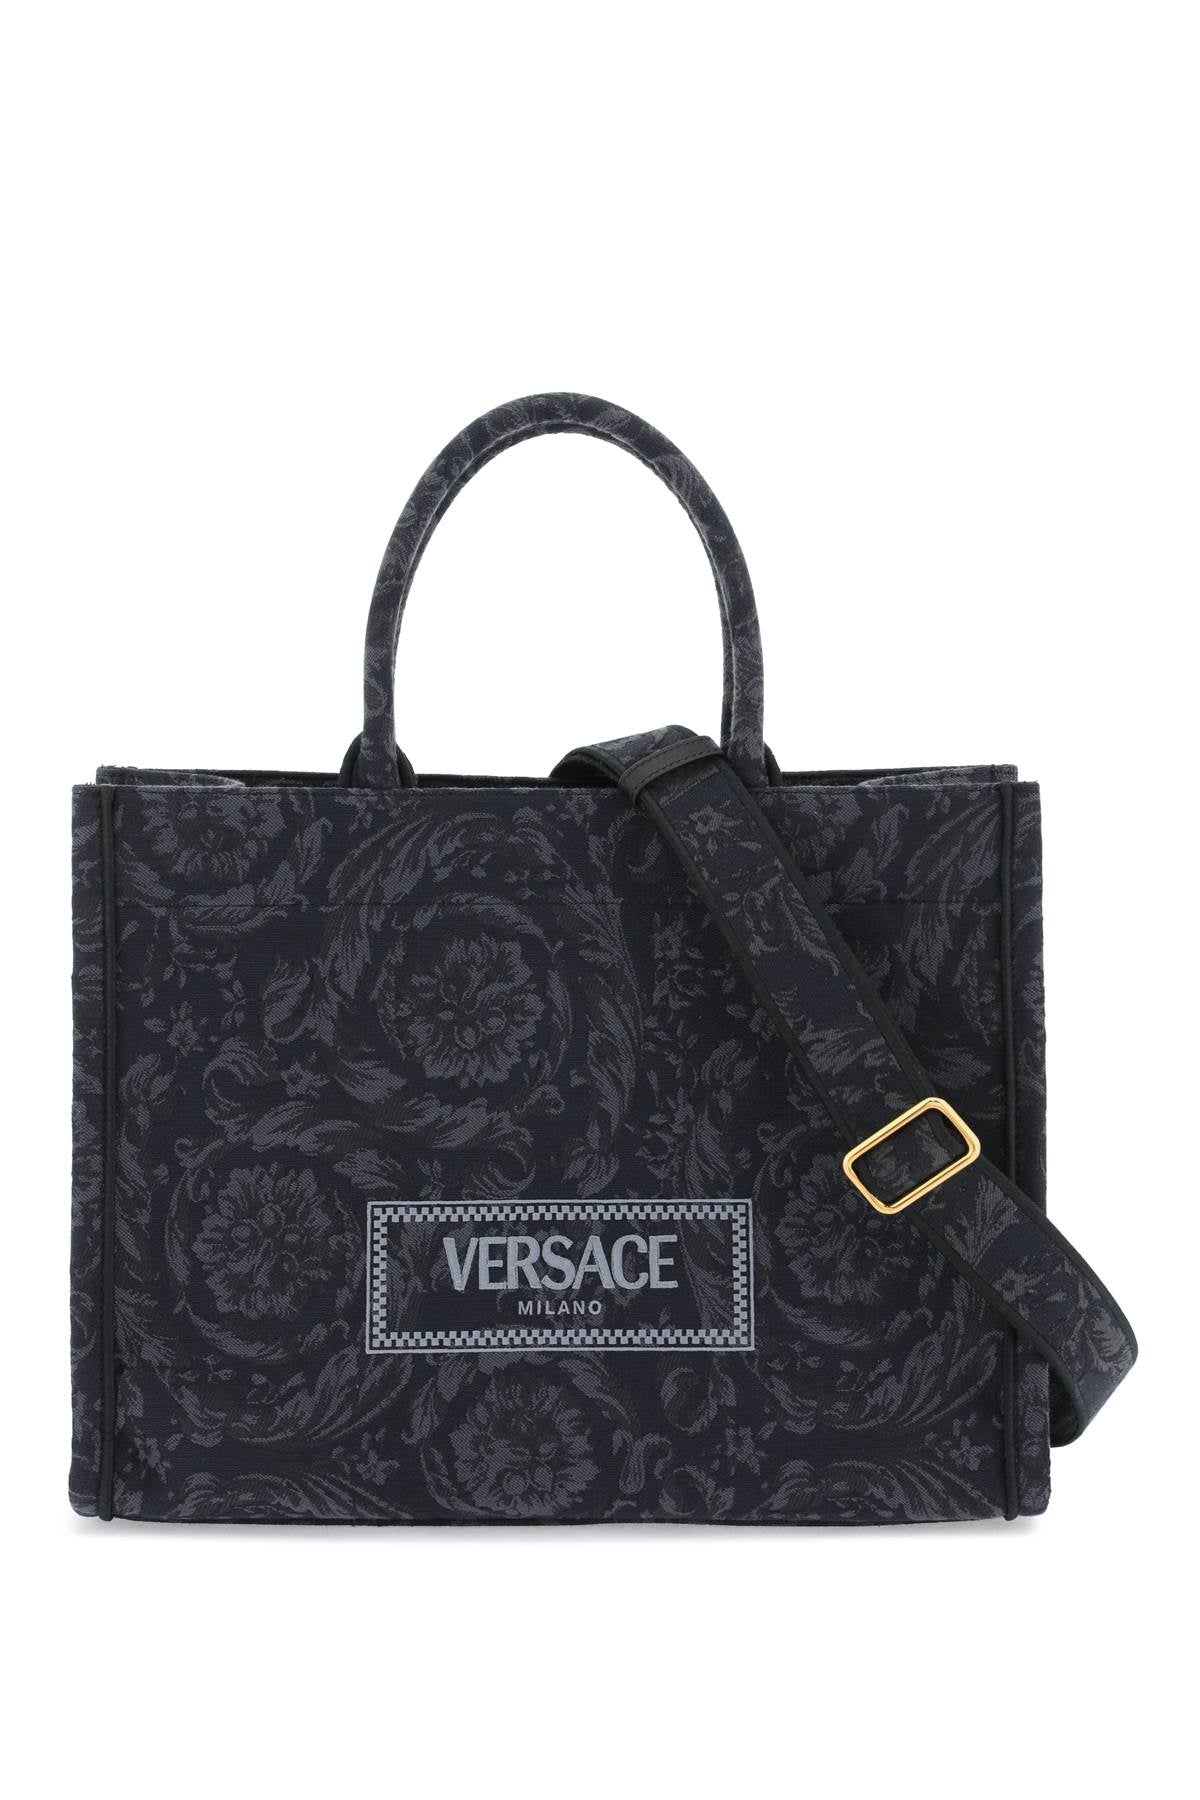 Versace athena barocco 手提包 1011562 1A09741 黑色 黑色 VERSACE 金色